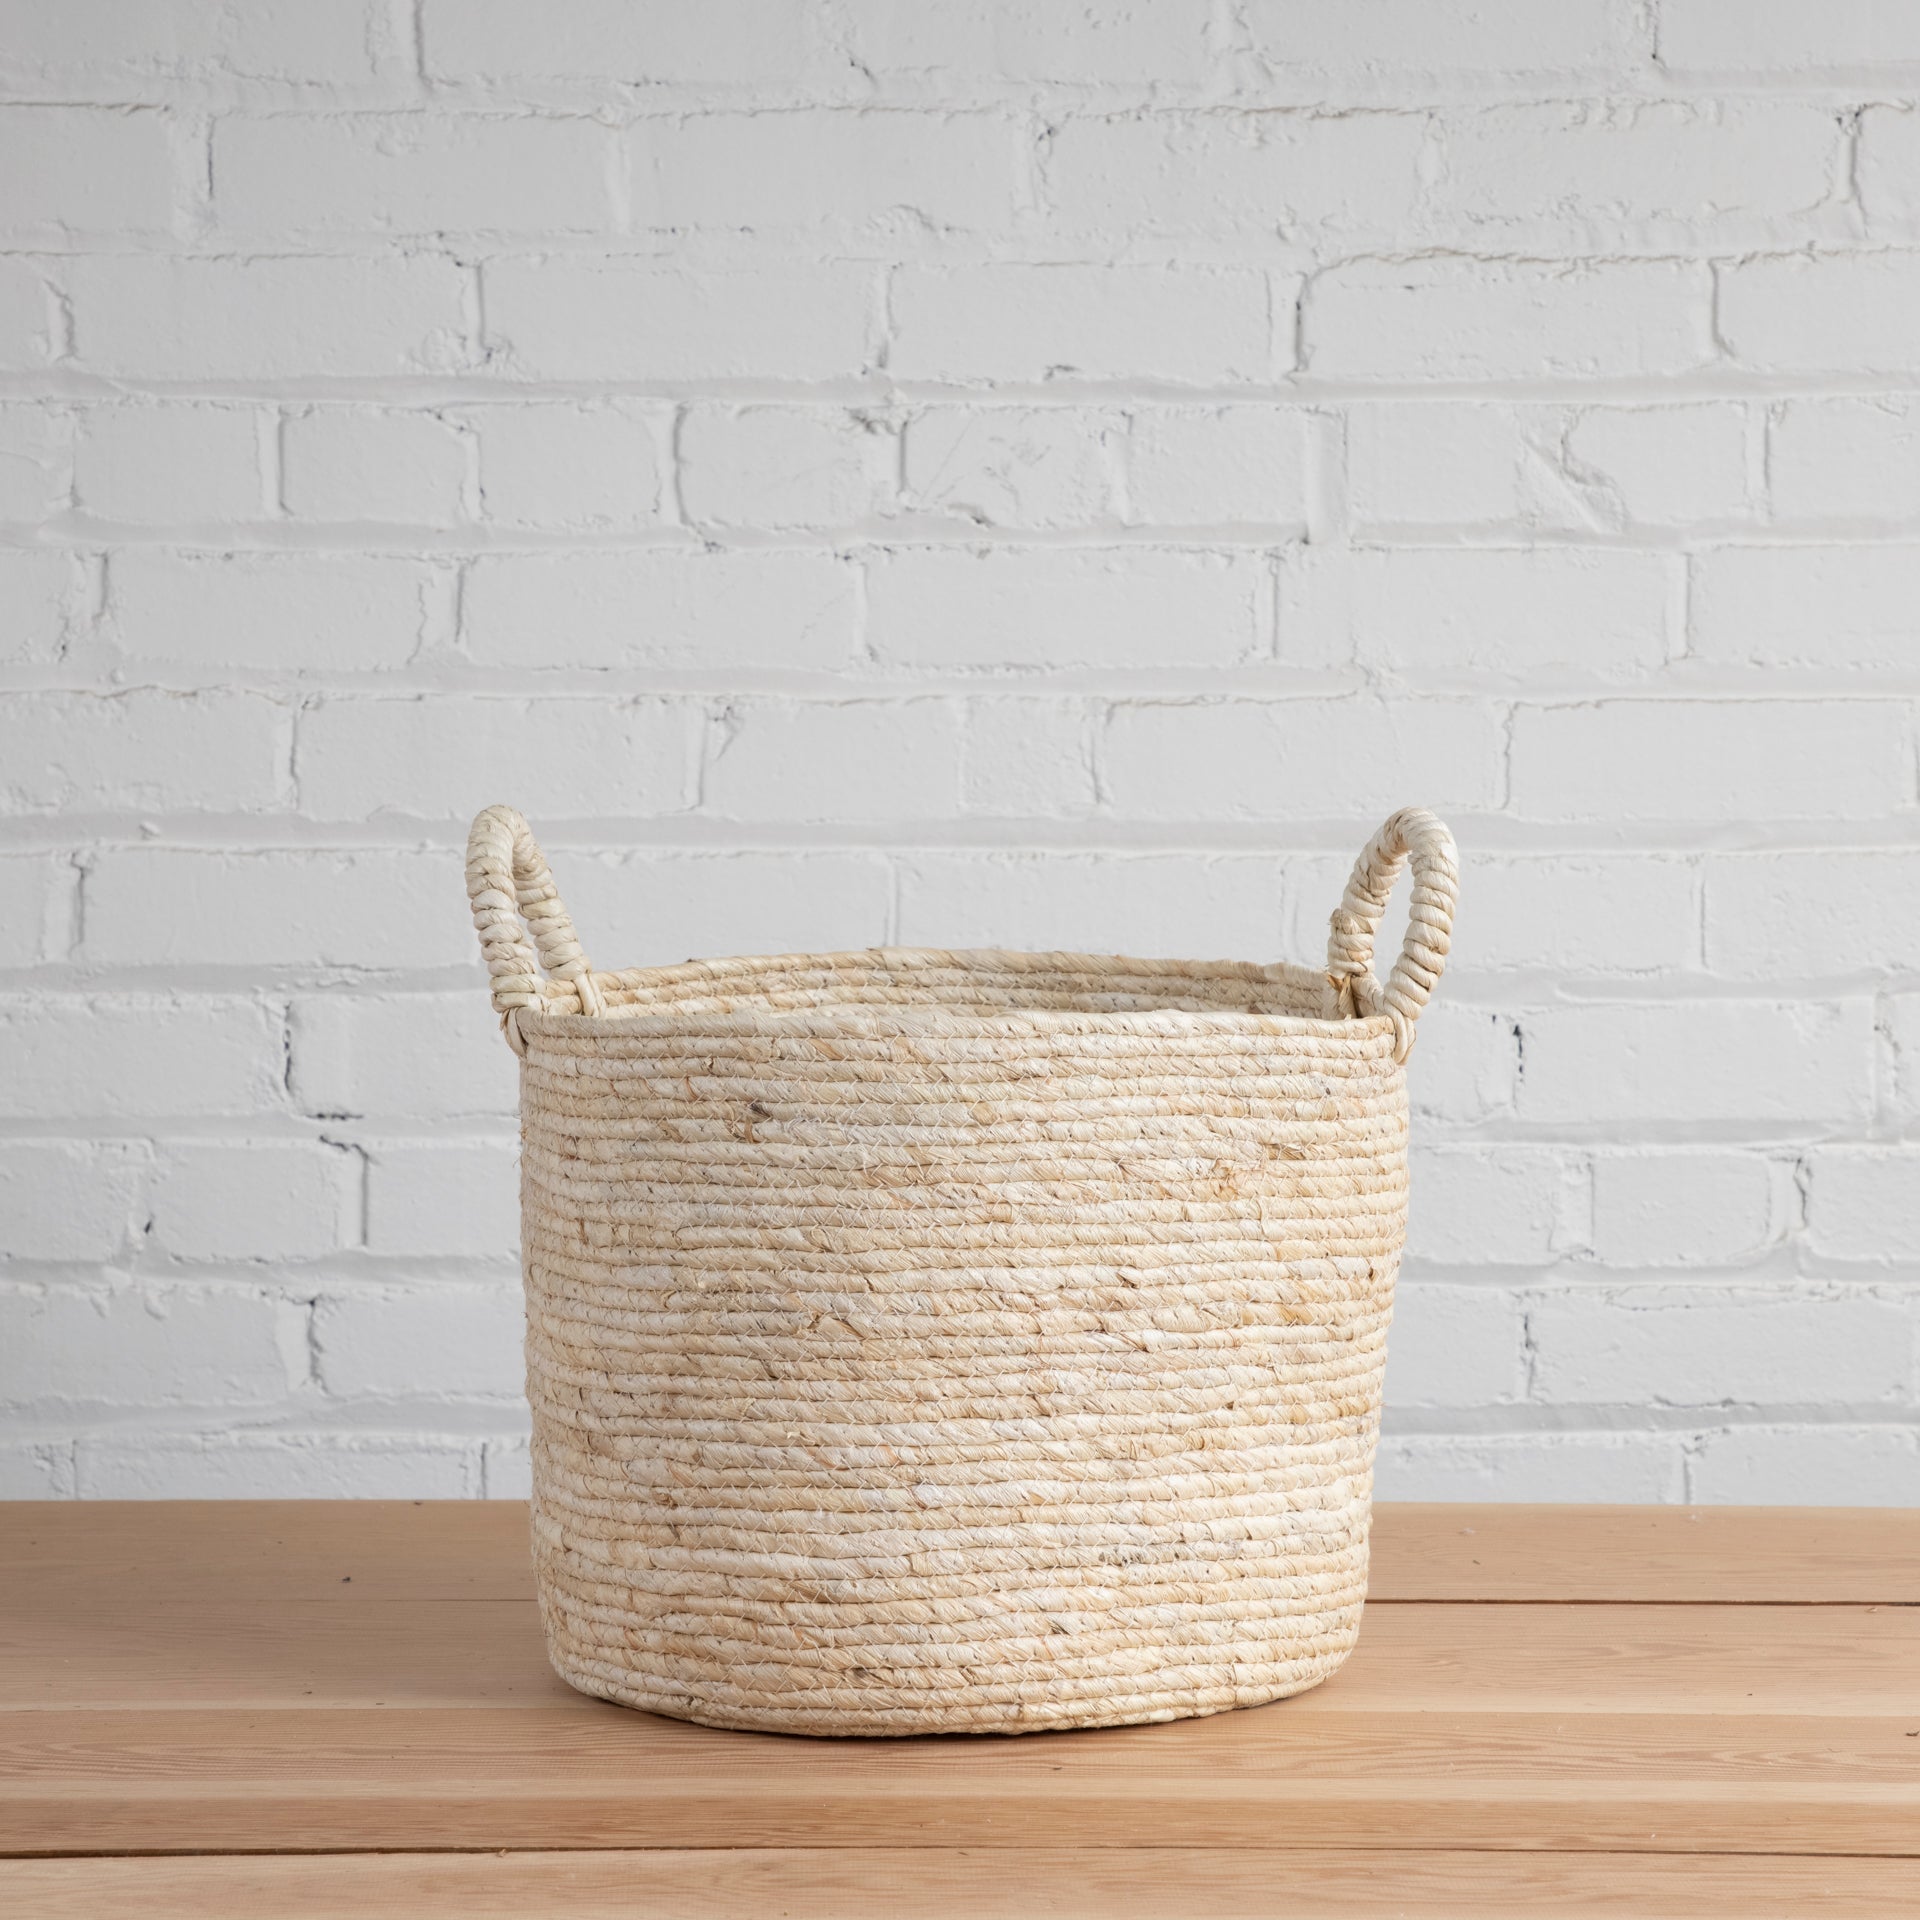 Maiz Basket with Handles, Large